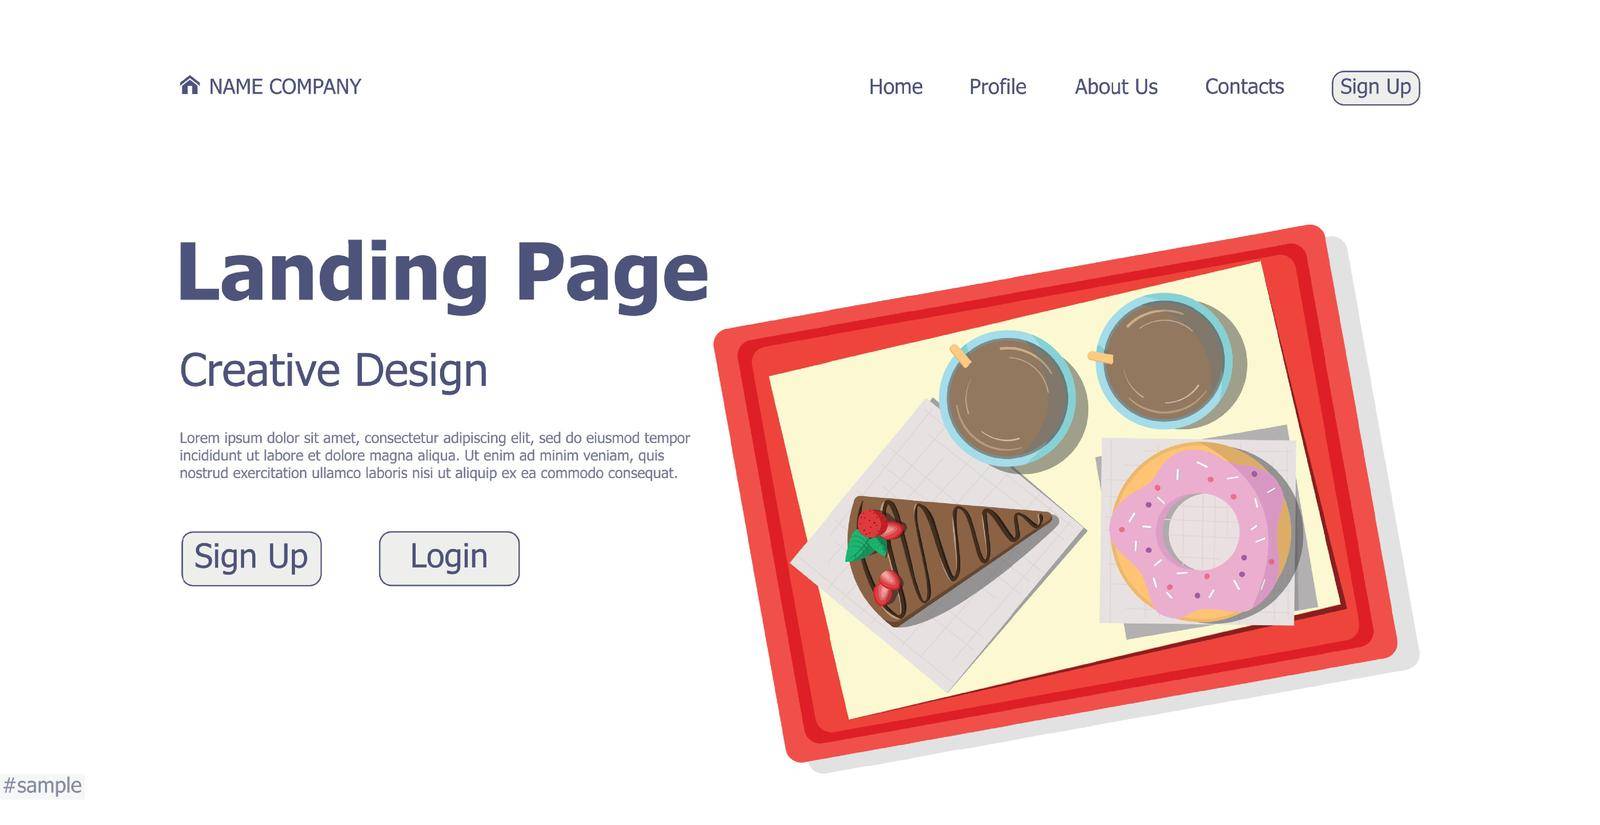 Design concept for confectionery shop website landing page - Vector illustration